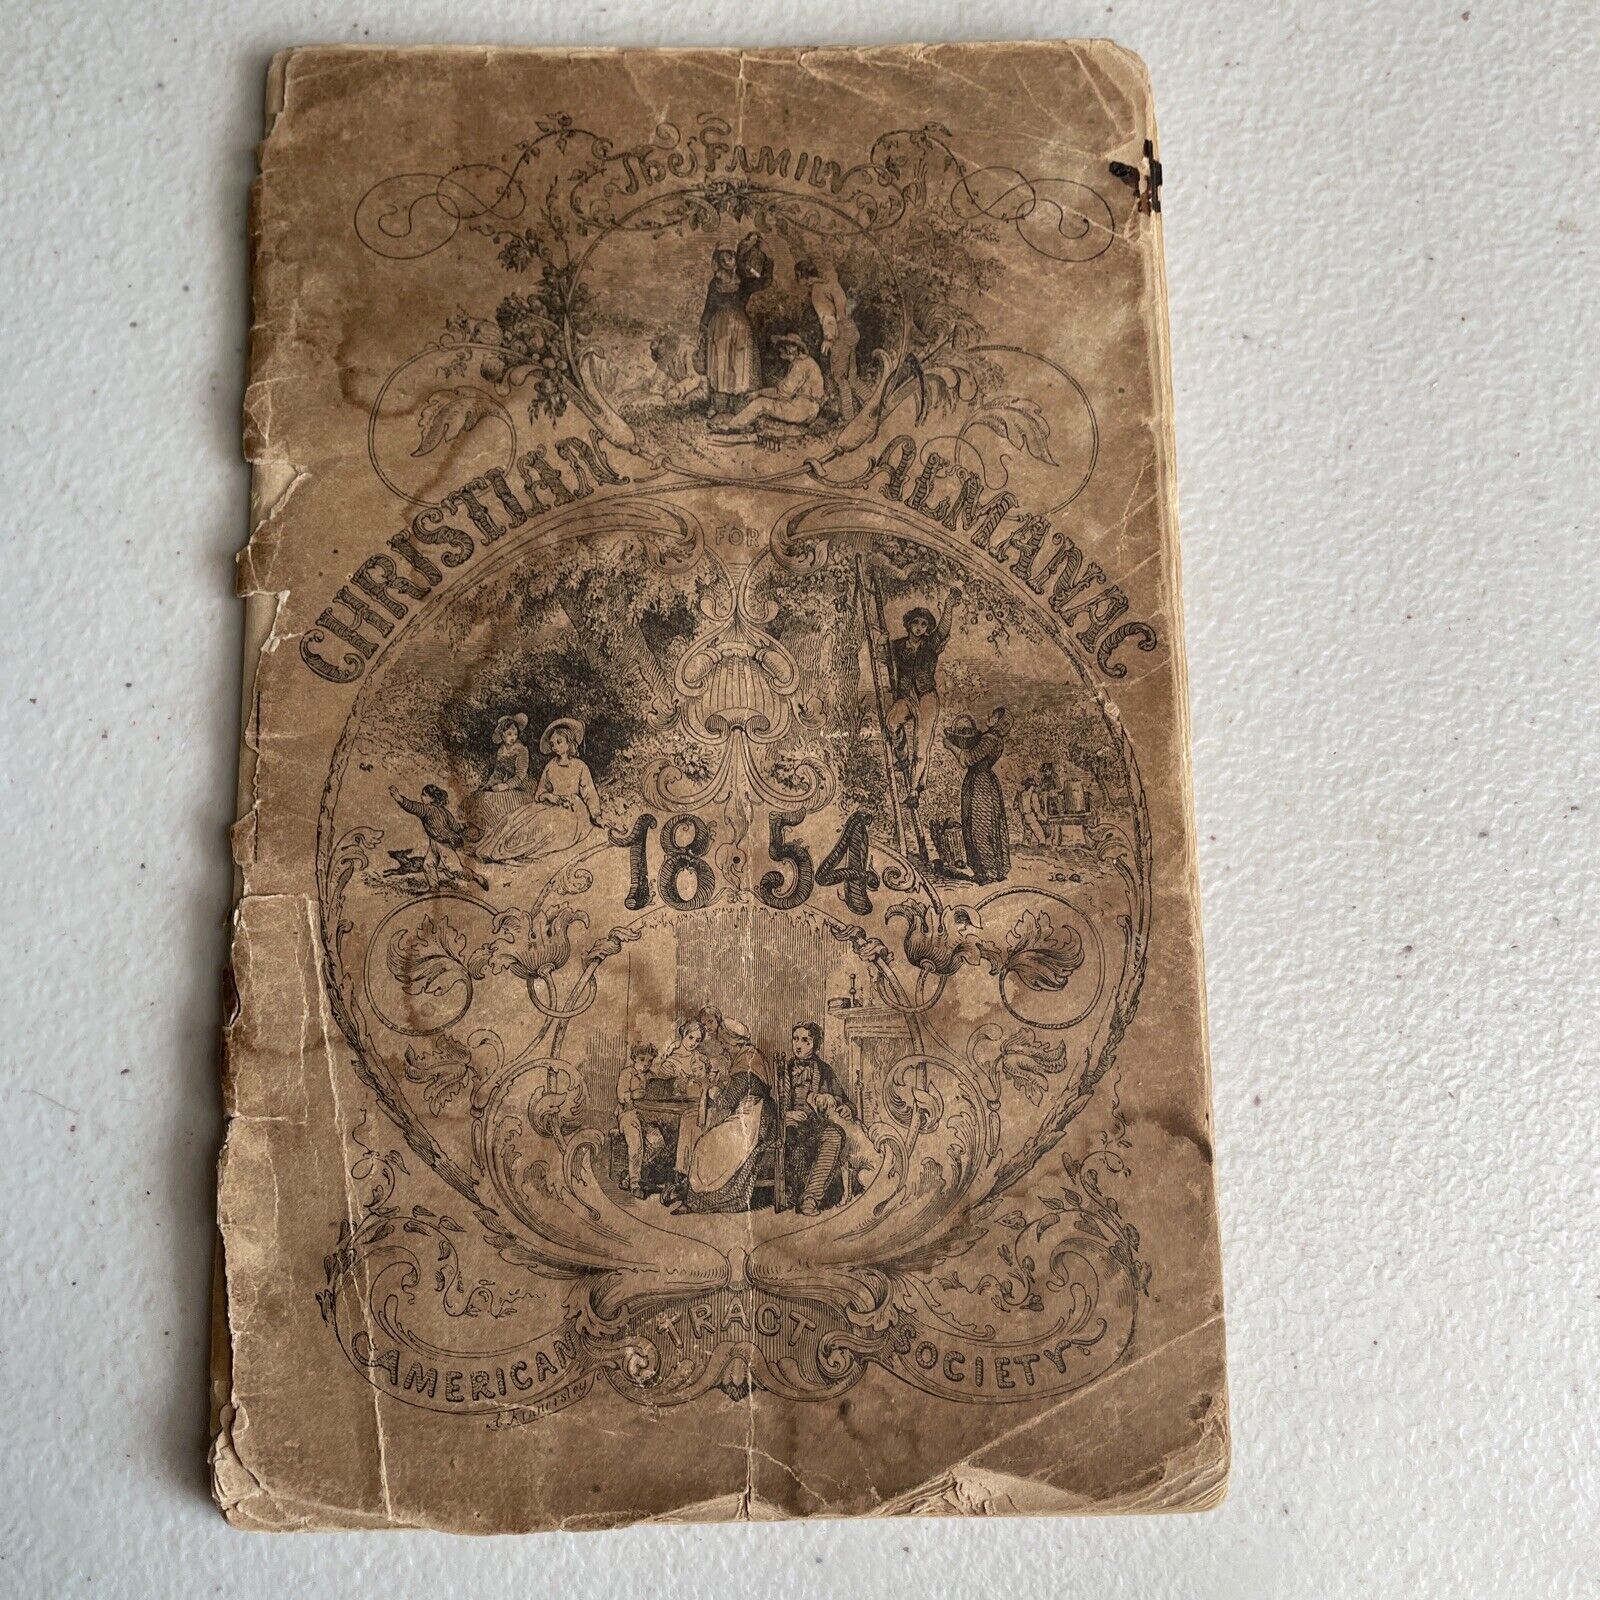 RARE Civil War Era American Tract Family Christian Almanac c1854